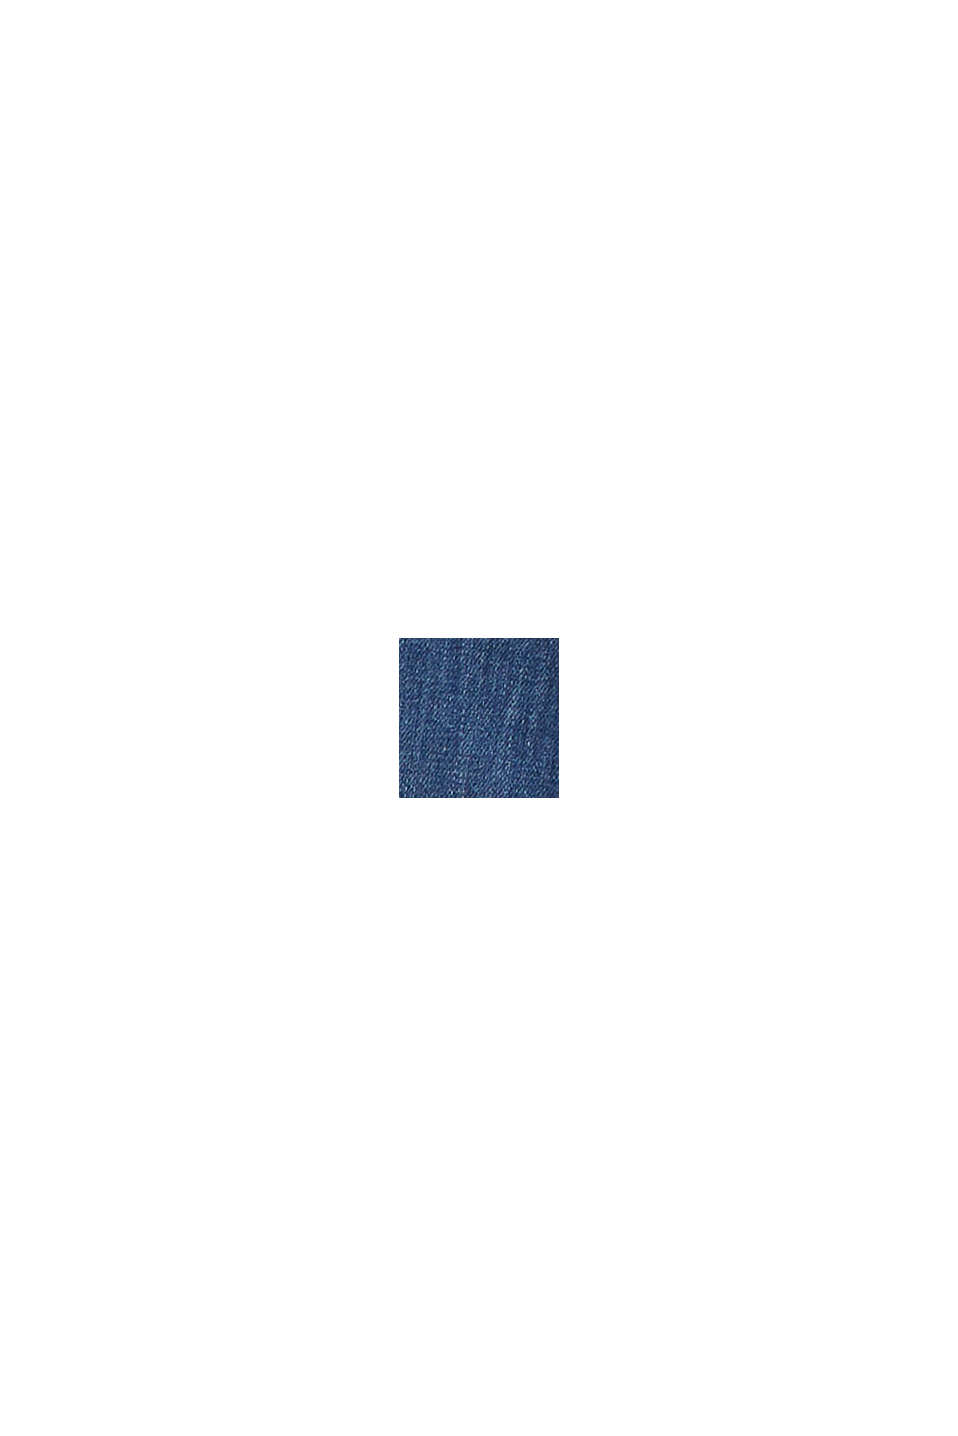 Jeans stretch in misto cotone biologico, BLUE DARK WASHED, swatch